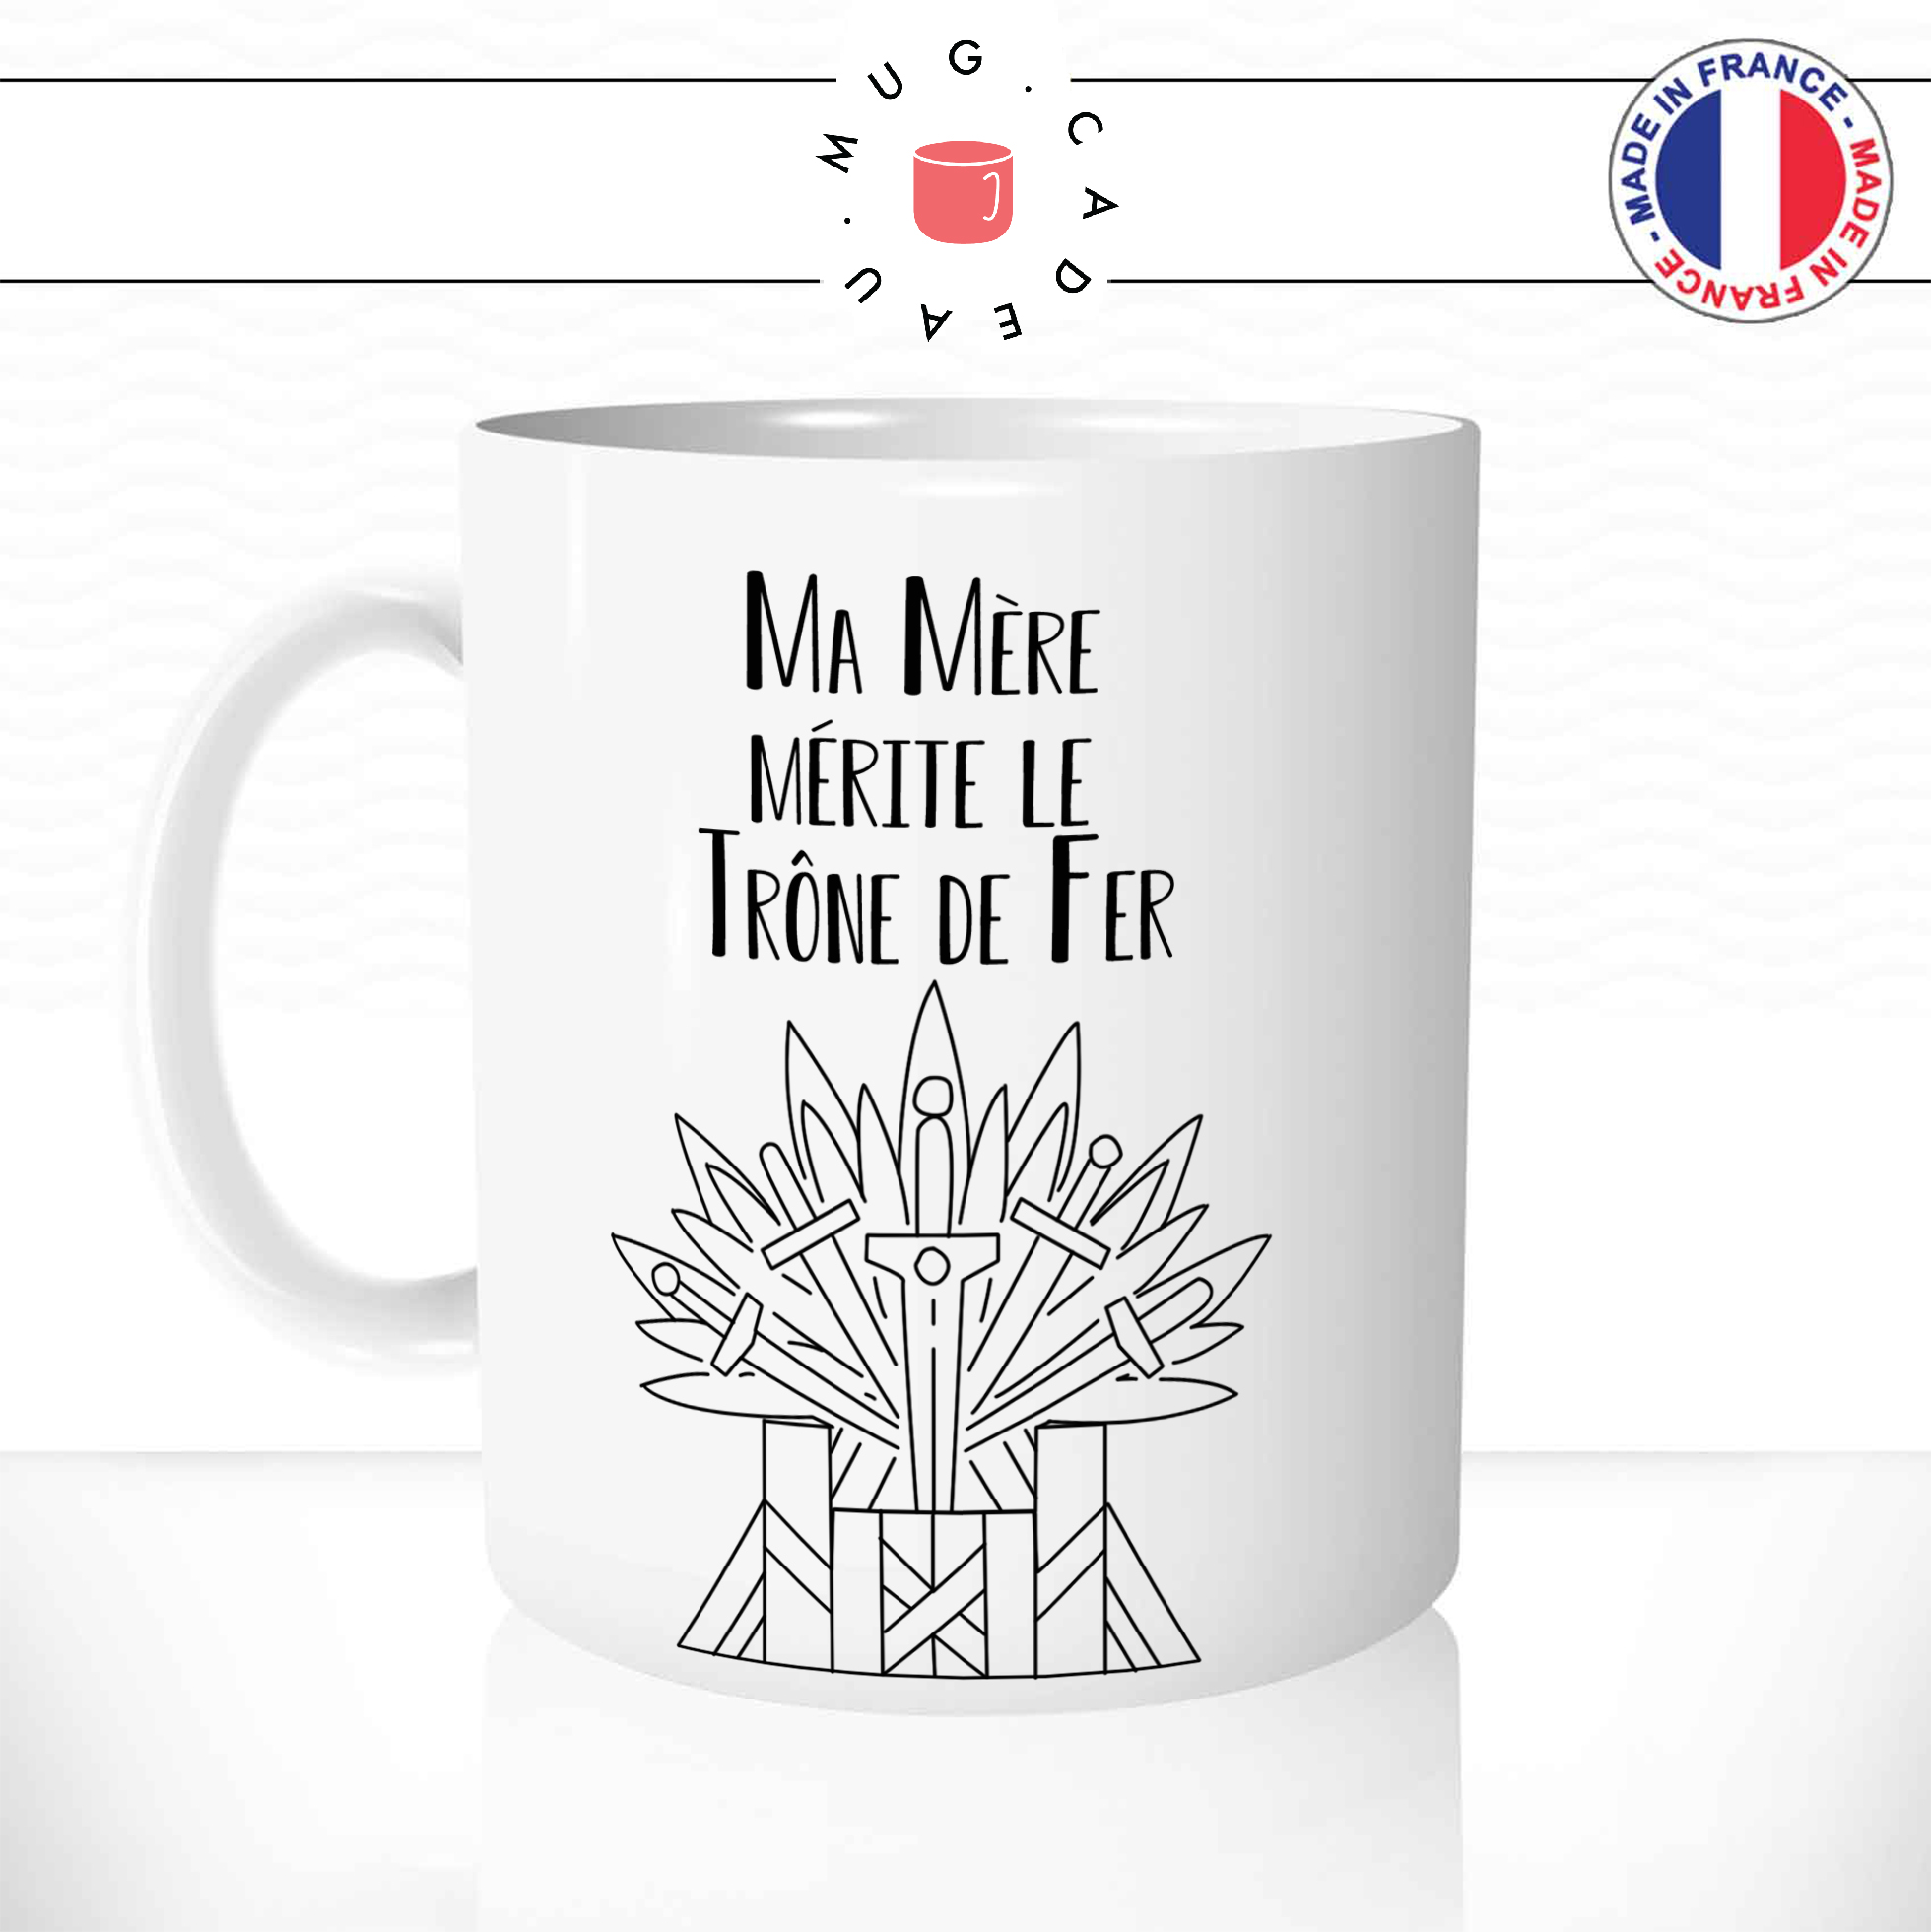 mug-tasse-ref6-fete-des-meres-game-of-thrones-cafe-the-mugs-tasses-personnalise-anse-gauche